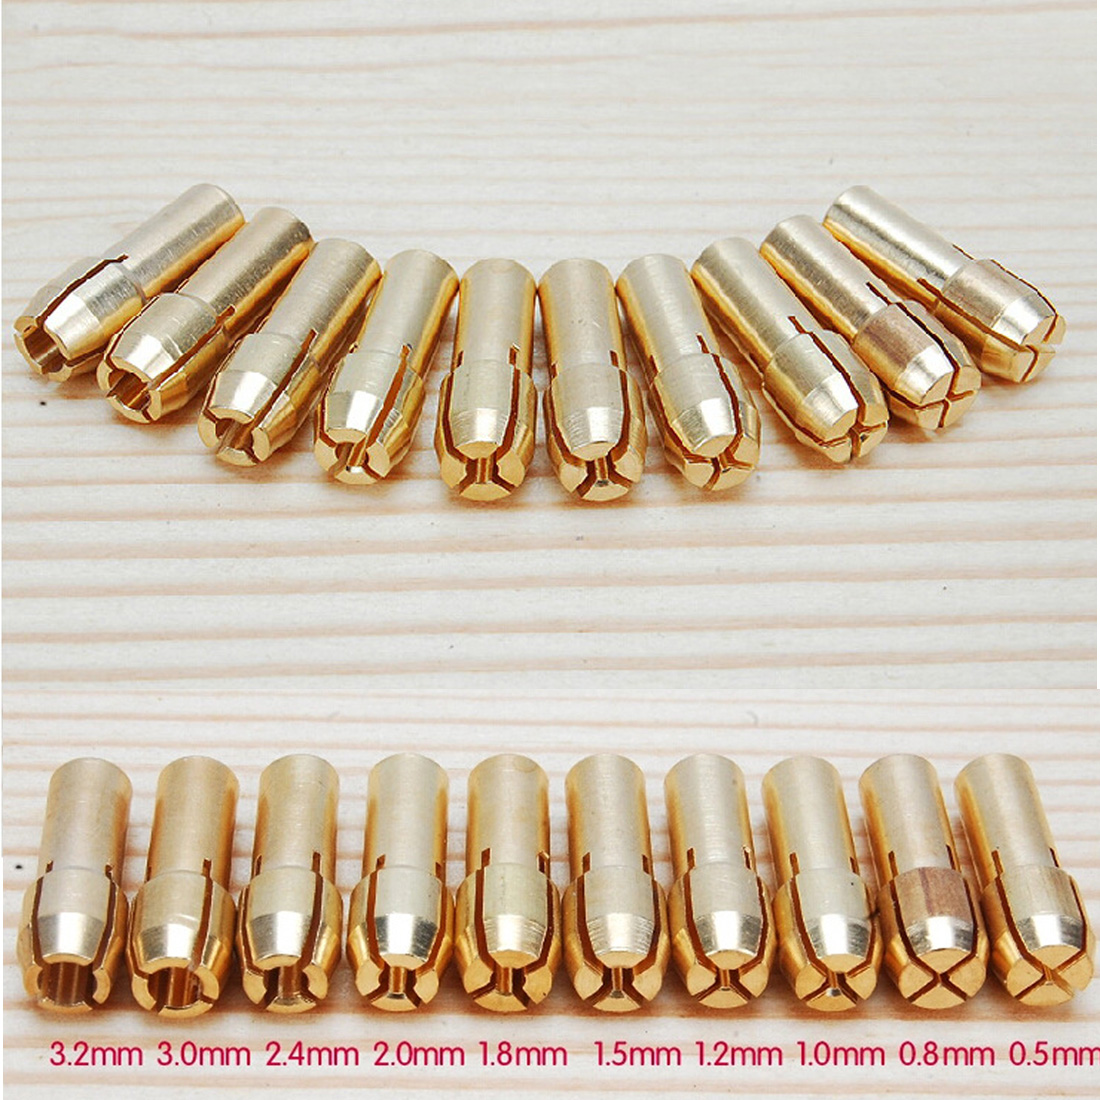 4.3mm Shank 10Pcs/11pcs Brass Collet Chuck Bits for Mini Drill Dremel Rotary Tool 0.5/0.8/1.0/1.2/1.5/1.8/2.0/2.4/3.0/3.2mm